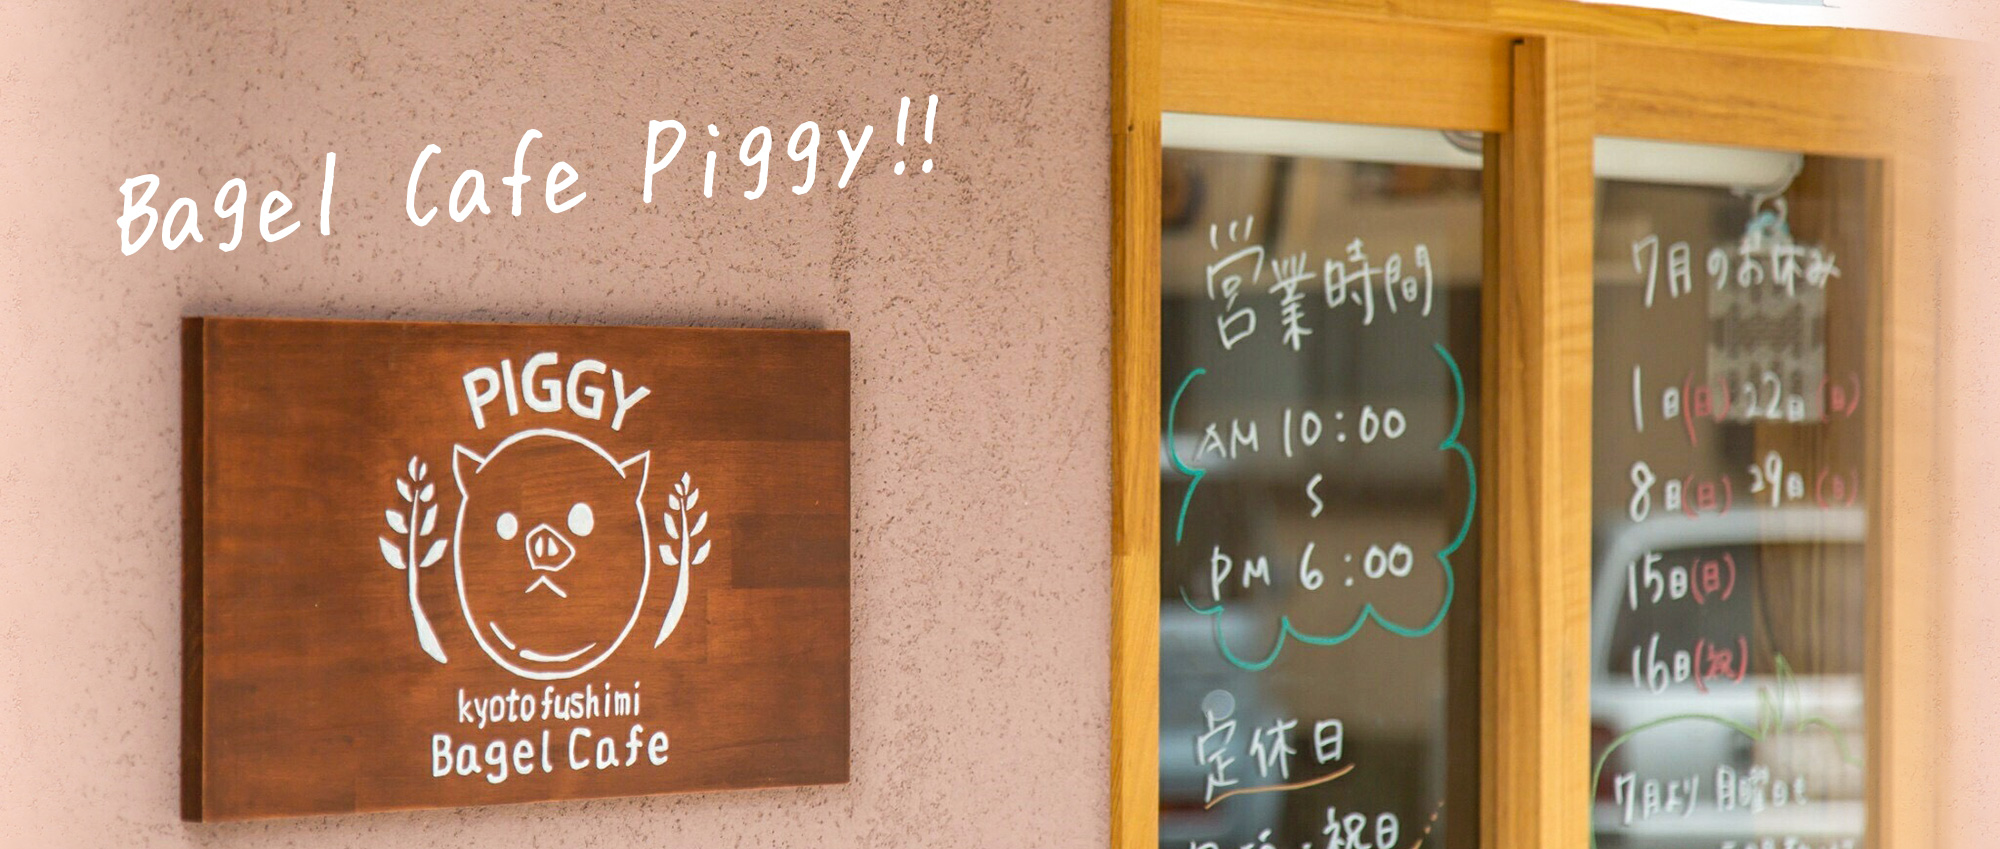 Bagel Cafe Piggy